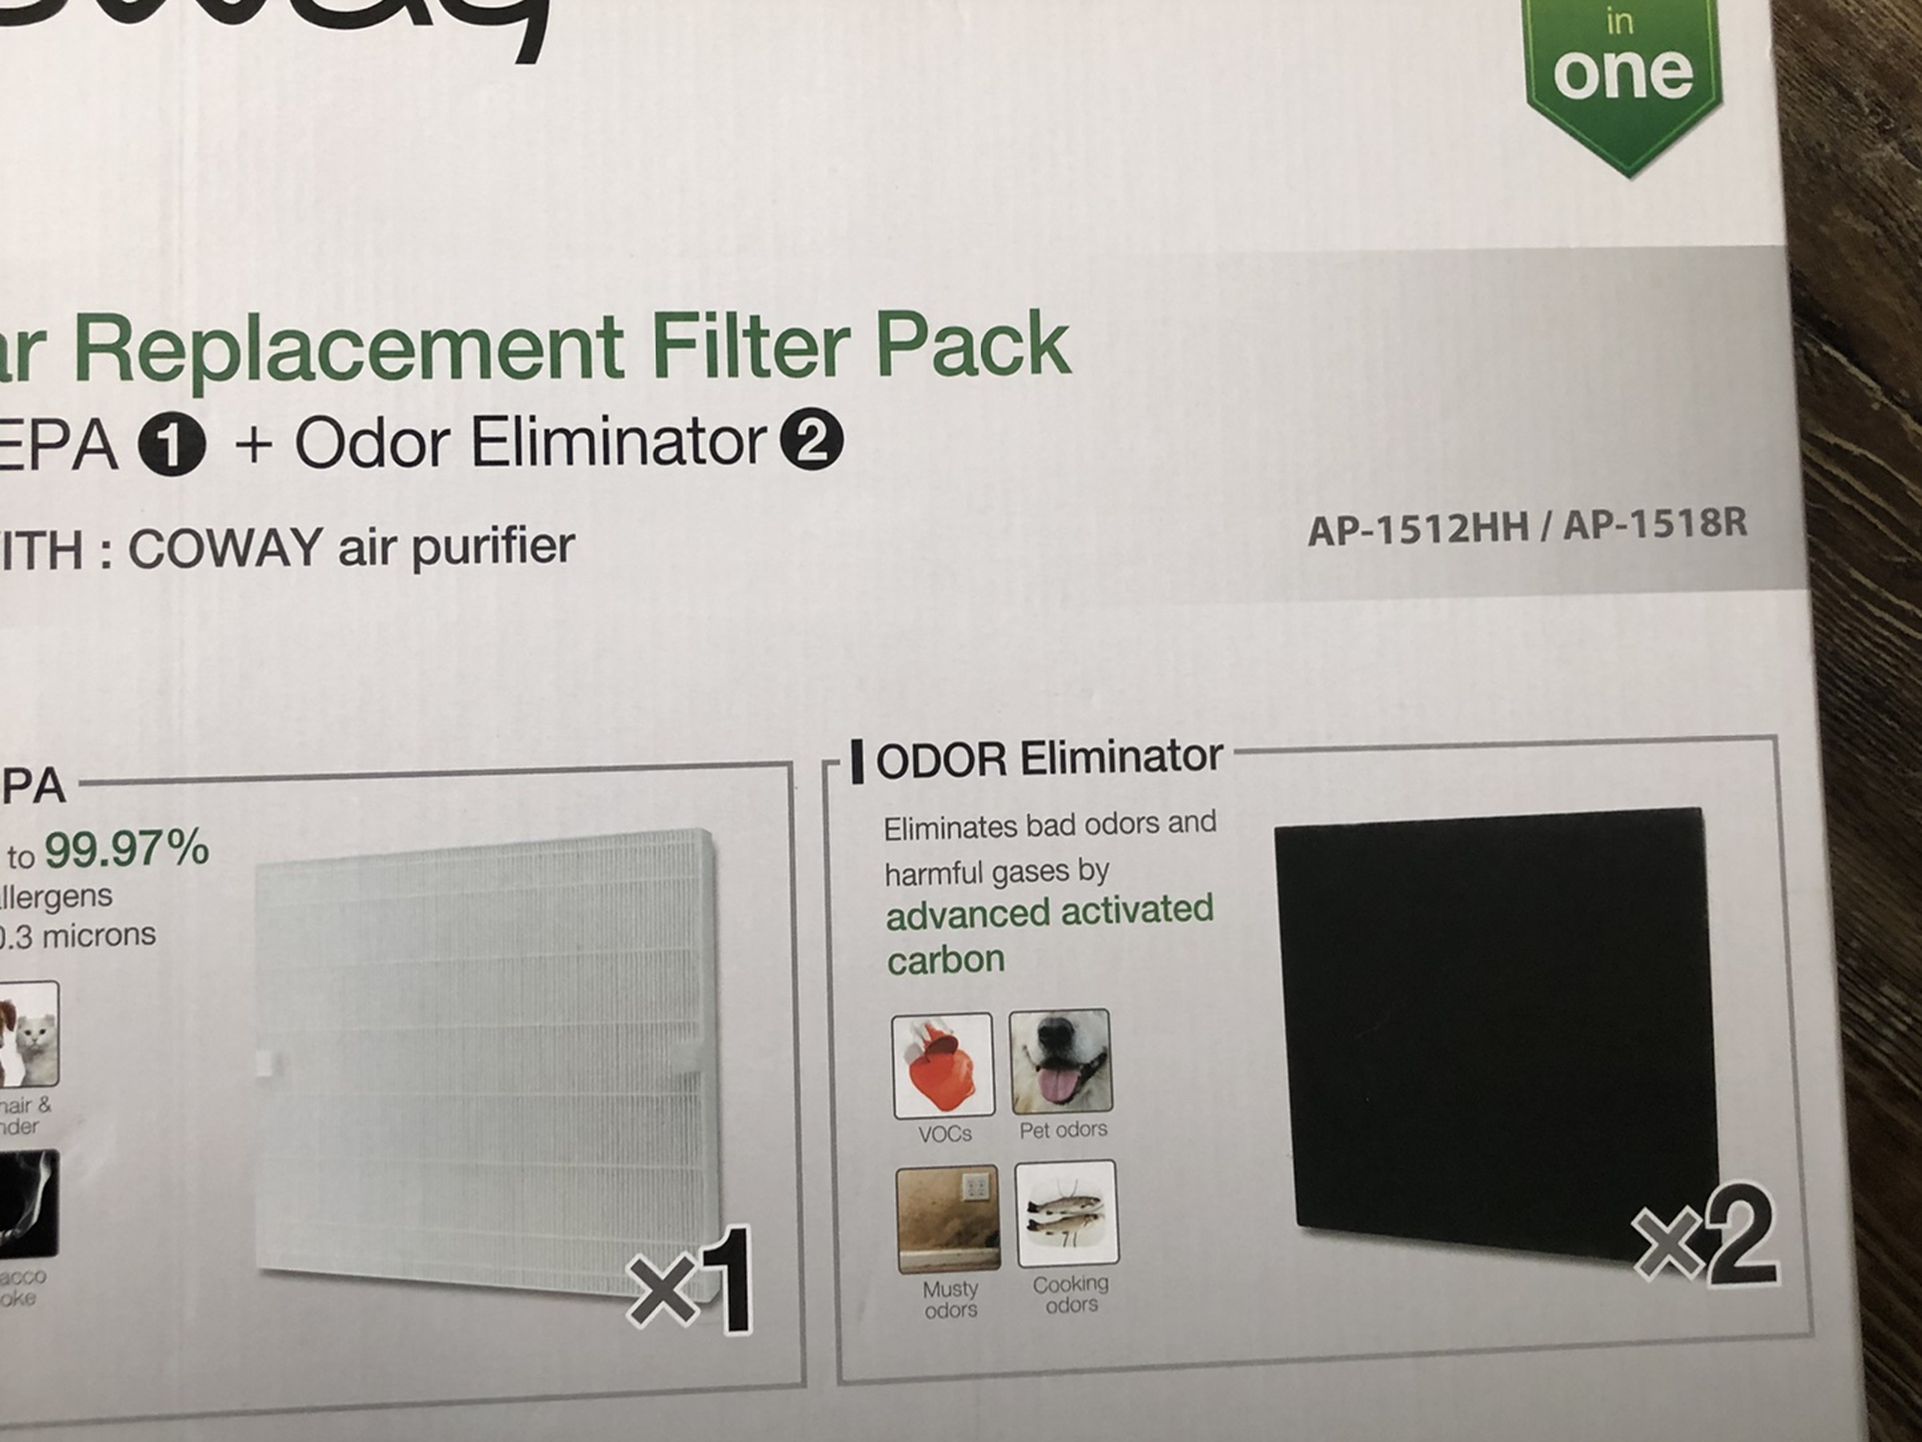 Filter Pack